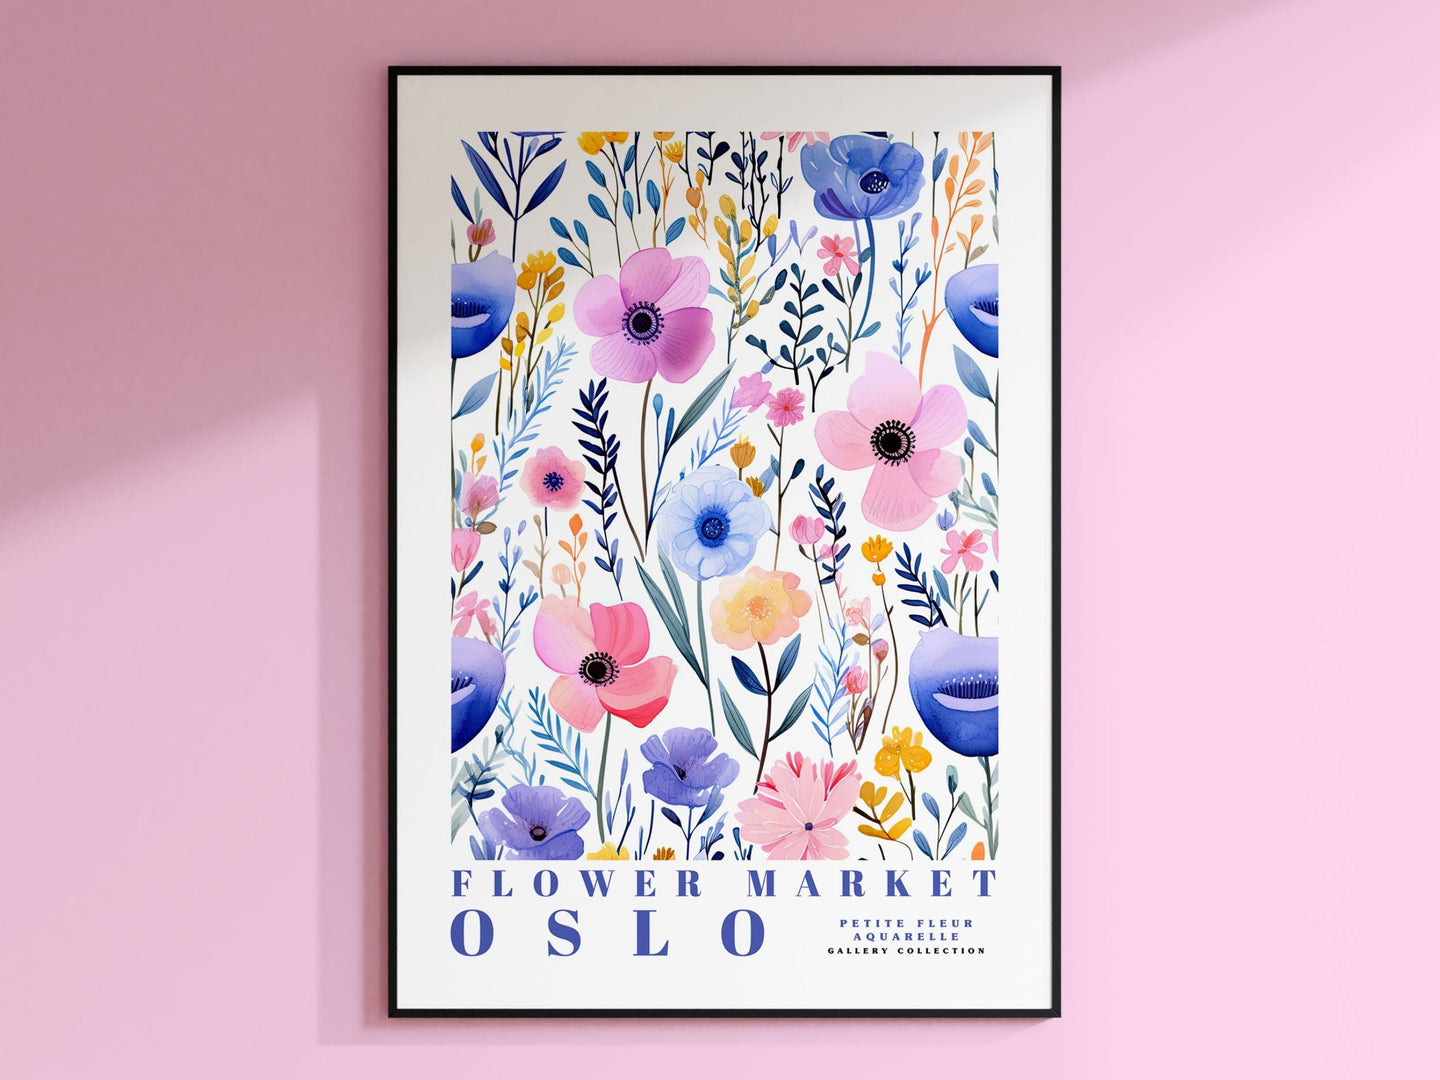 Oslo Flower Market Poster